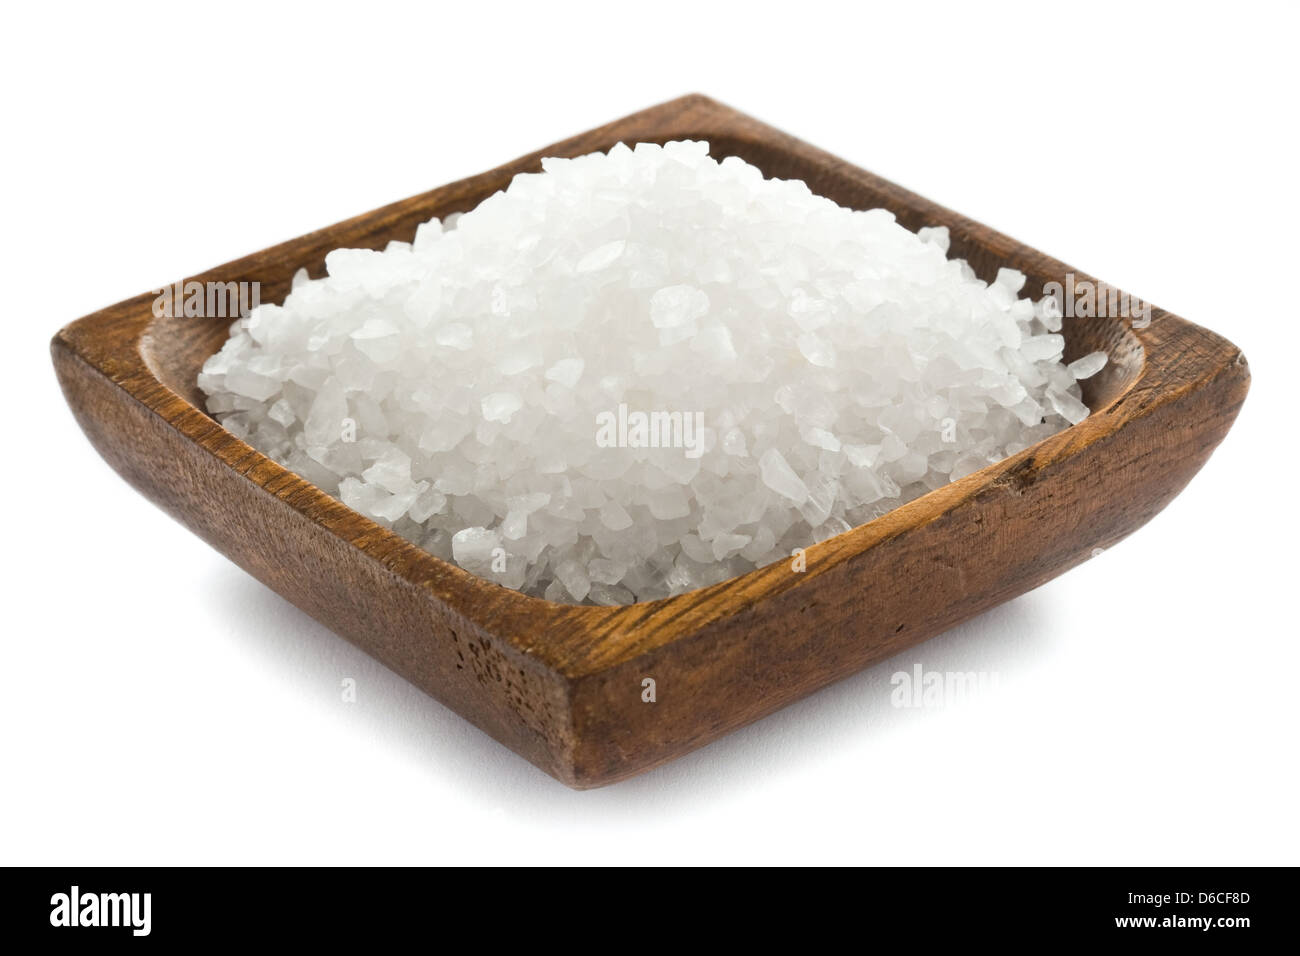 La sal del mar sano en el tazón de madera closeup Foto de stock